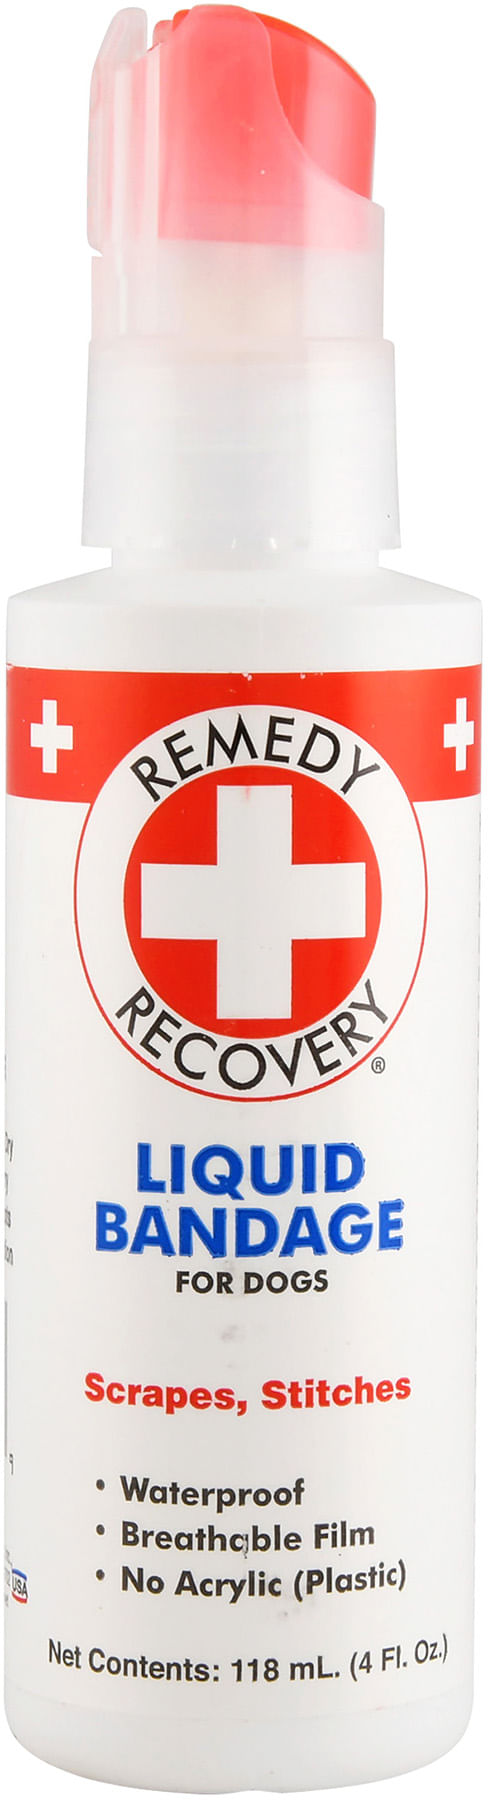 Remedy---Recovery-Liquid-Bandage-4-oz-